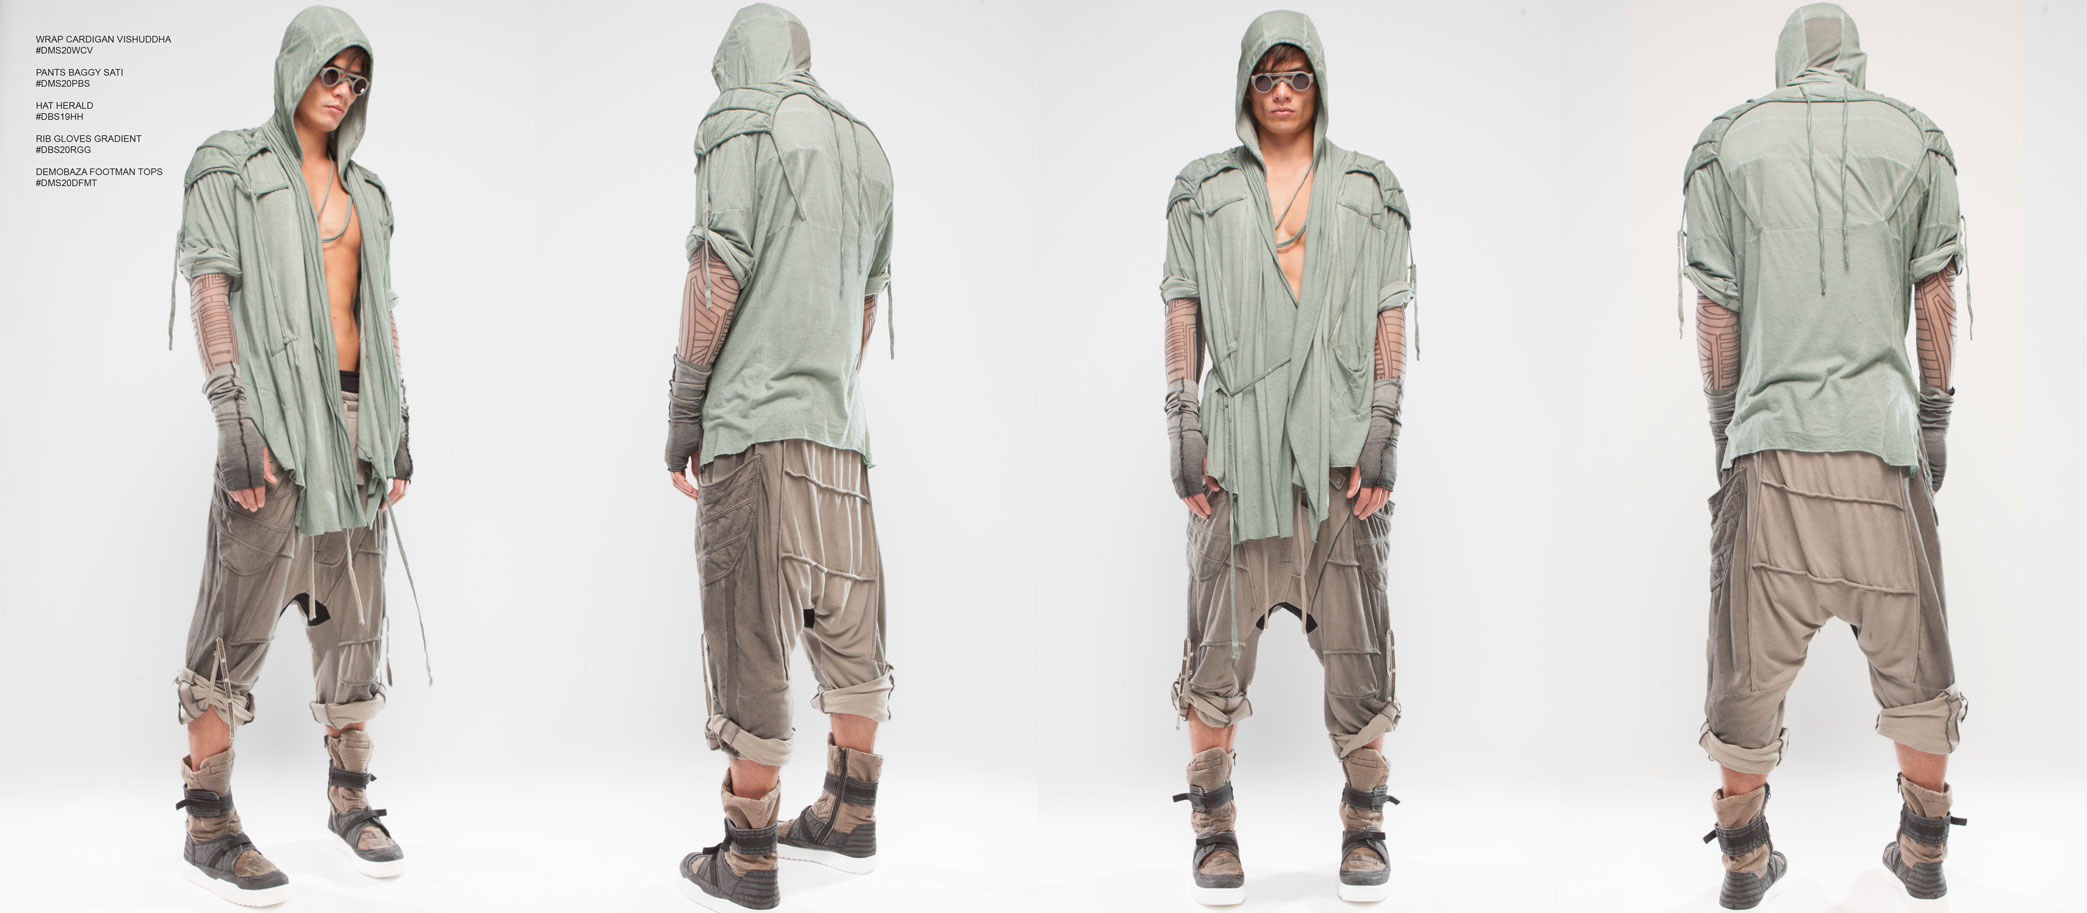 Mocker-slim Fit Double Waist Post Apocalyptic Trousers for Men and Women,  Madmax, Wasteland Fashion, Burningman Clothing, Goa Clothing 